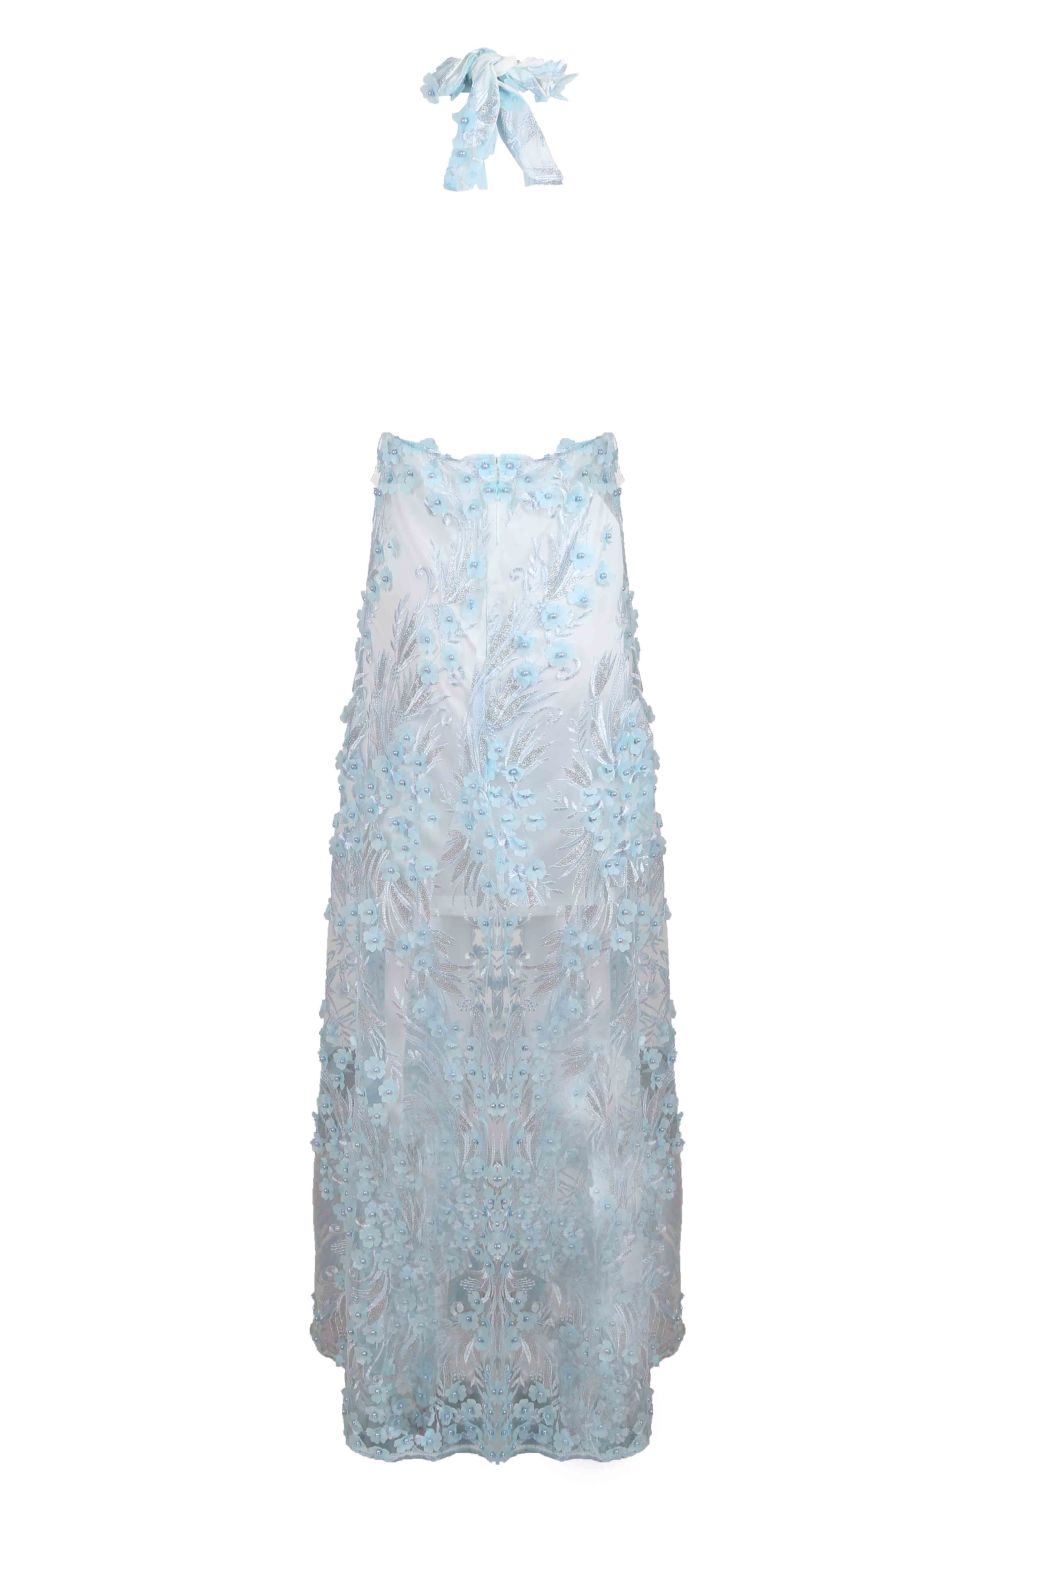 Blue Embroidery Mesh Maxi Evening Dress Lady High Quality Long Dress Summer